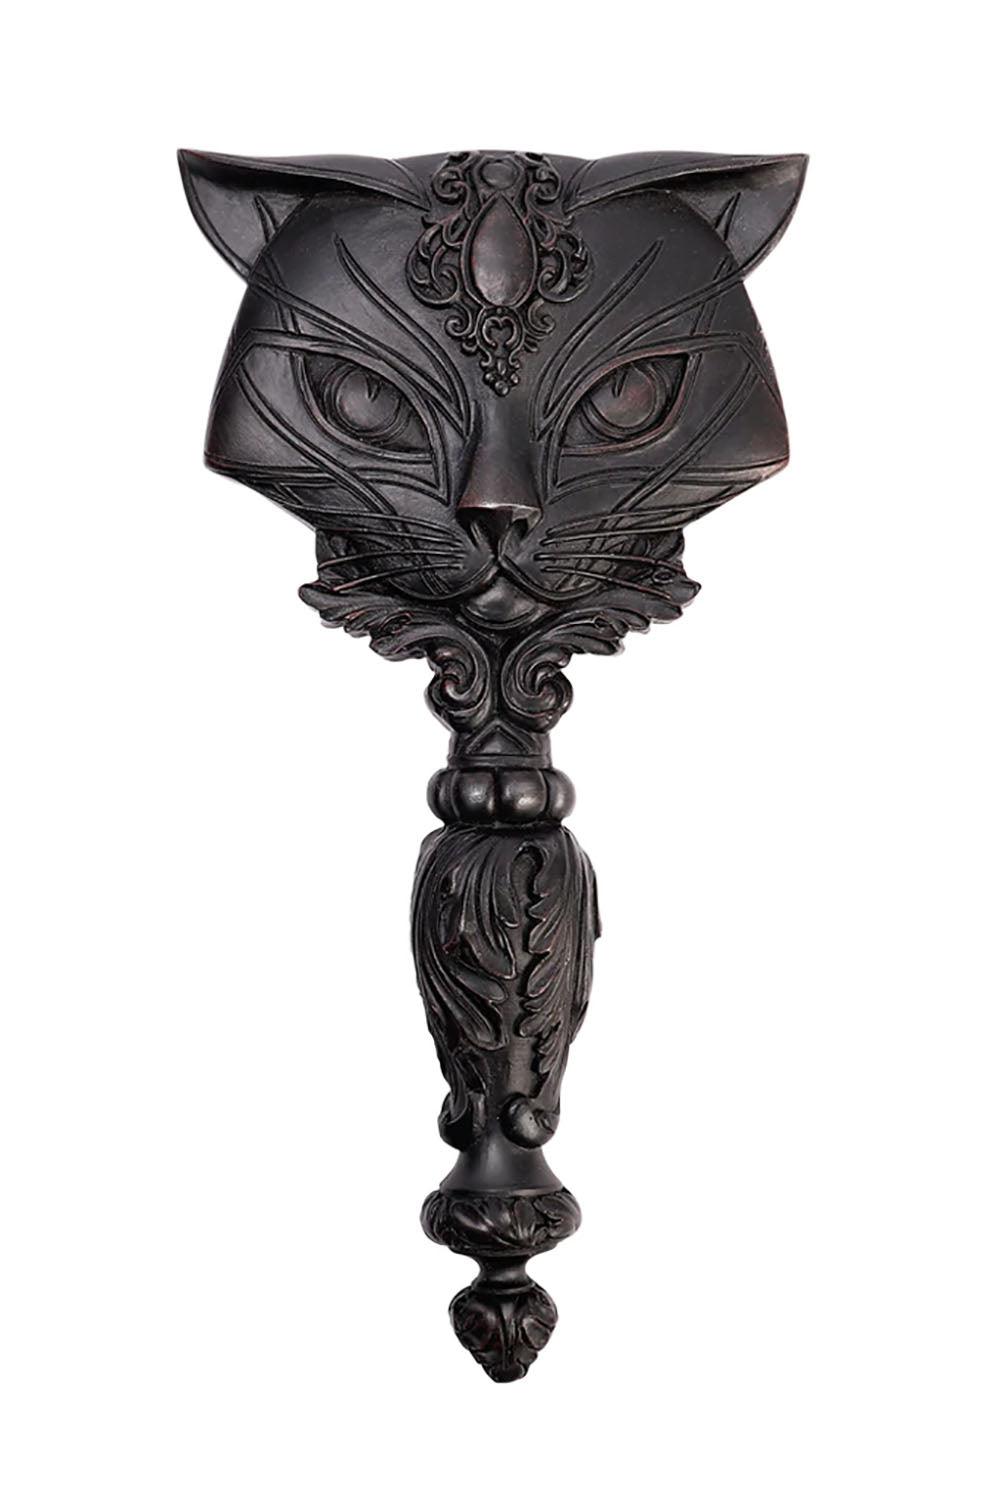 Alchemy Black Cat Hand Mirror - VampireFreaks